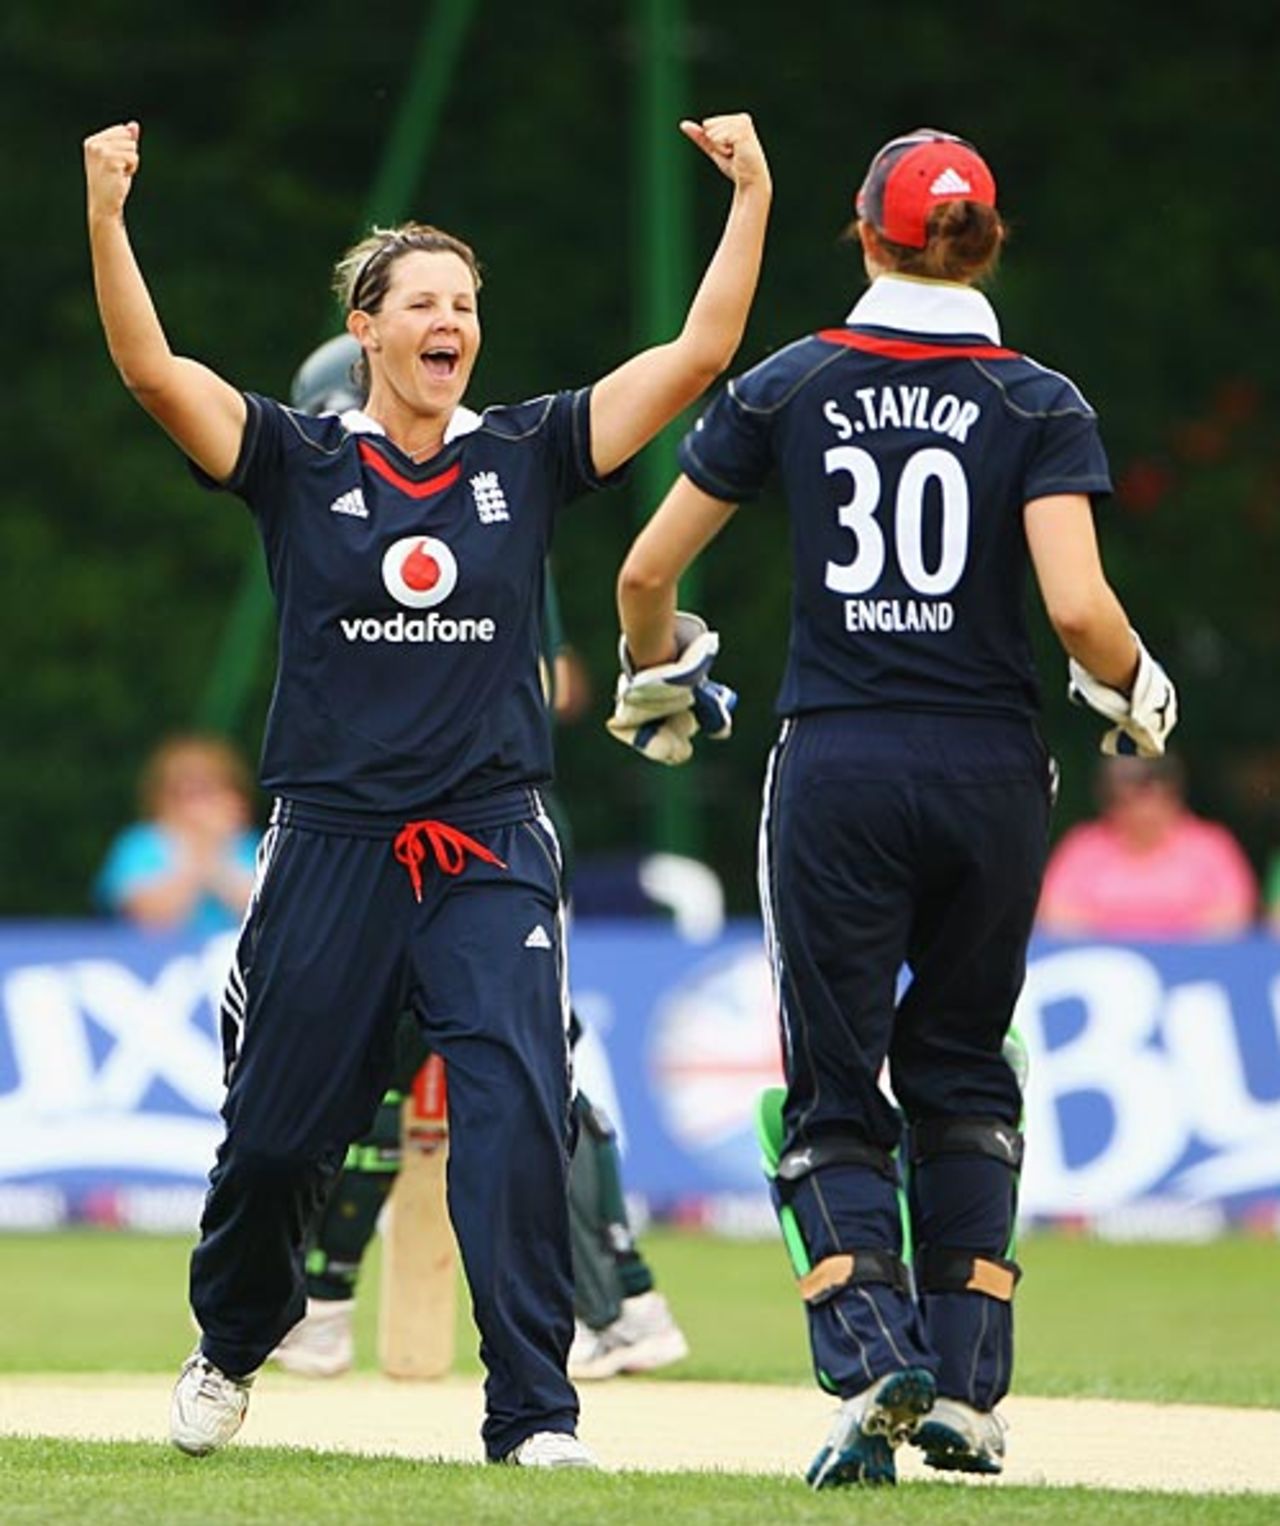 Nicky Shaw celebrates a wicket, England v Australia, 3rd women's ODI, Stratford, July 3, 2009 